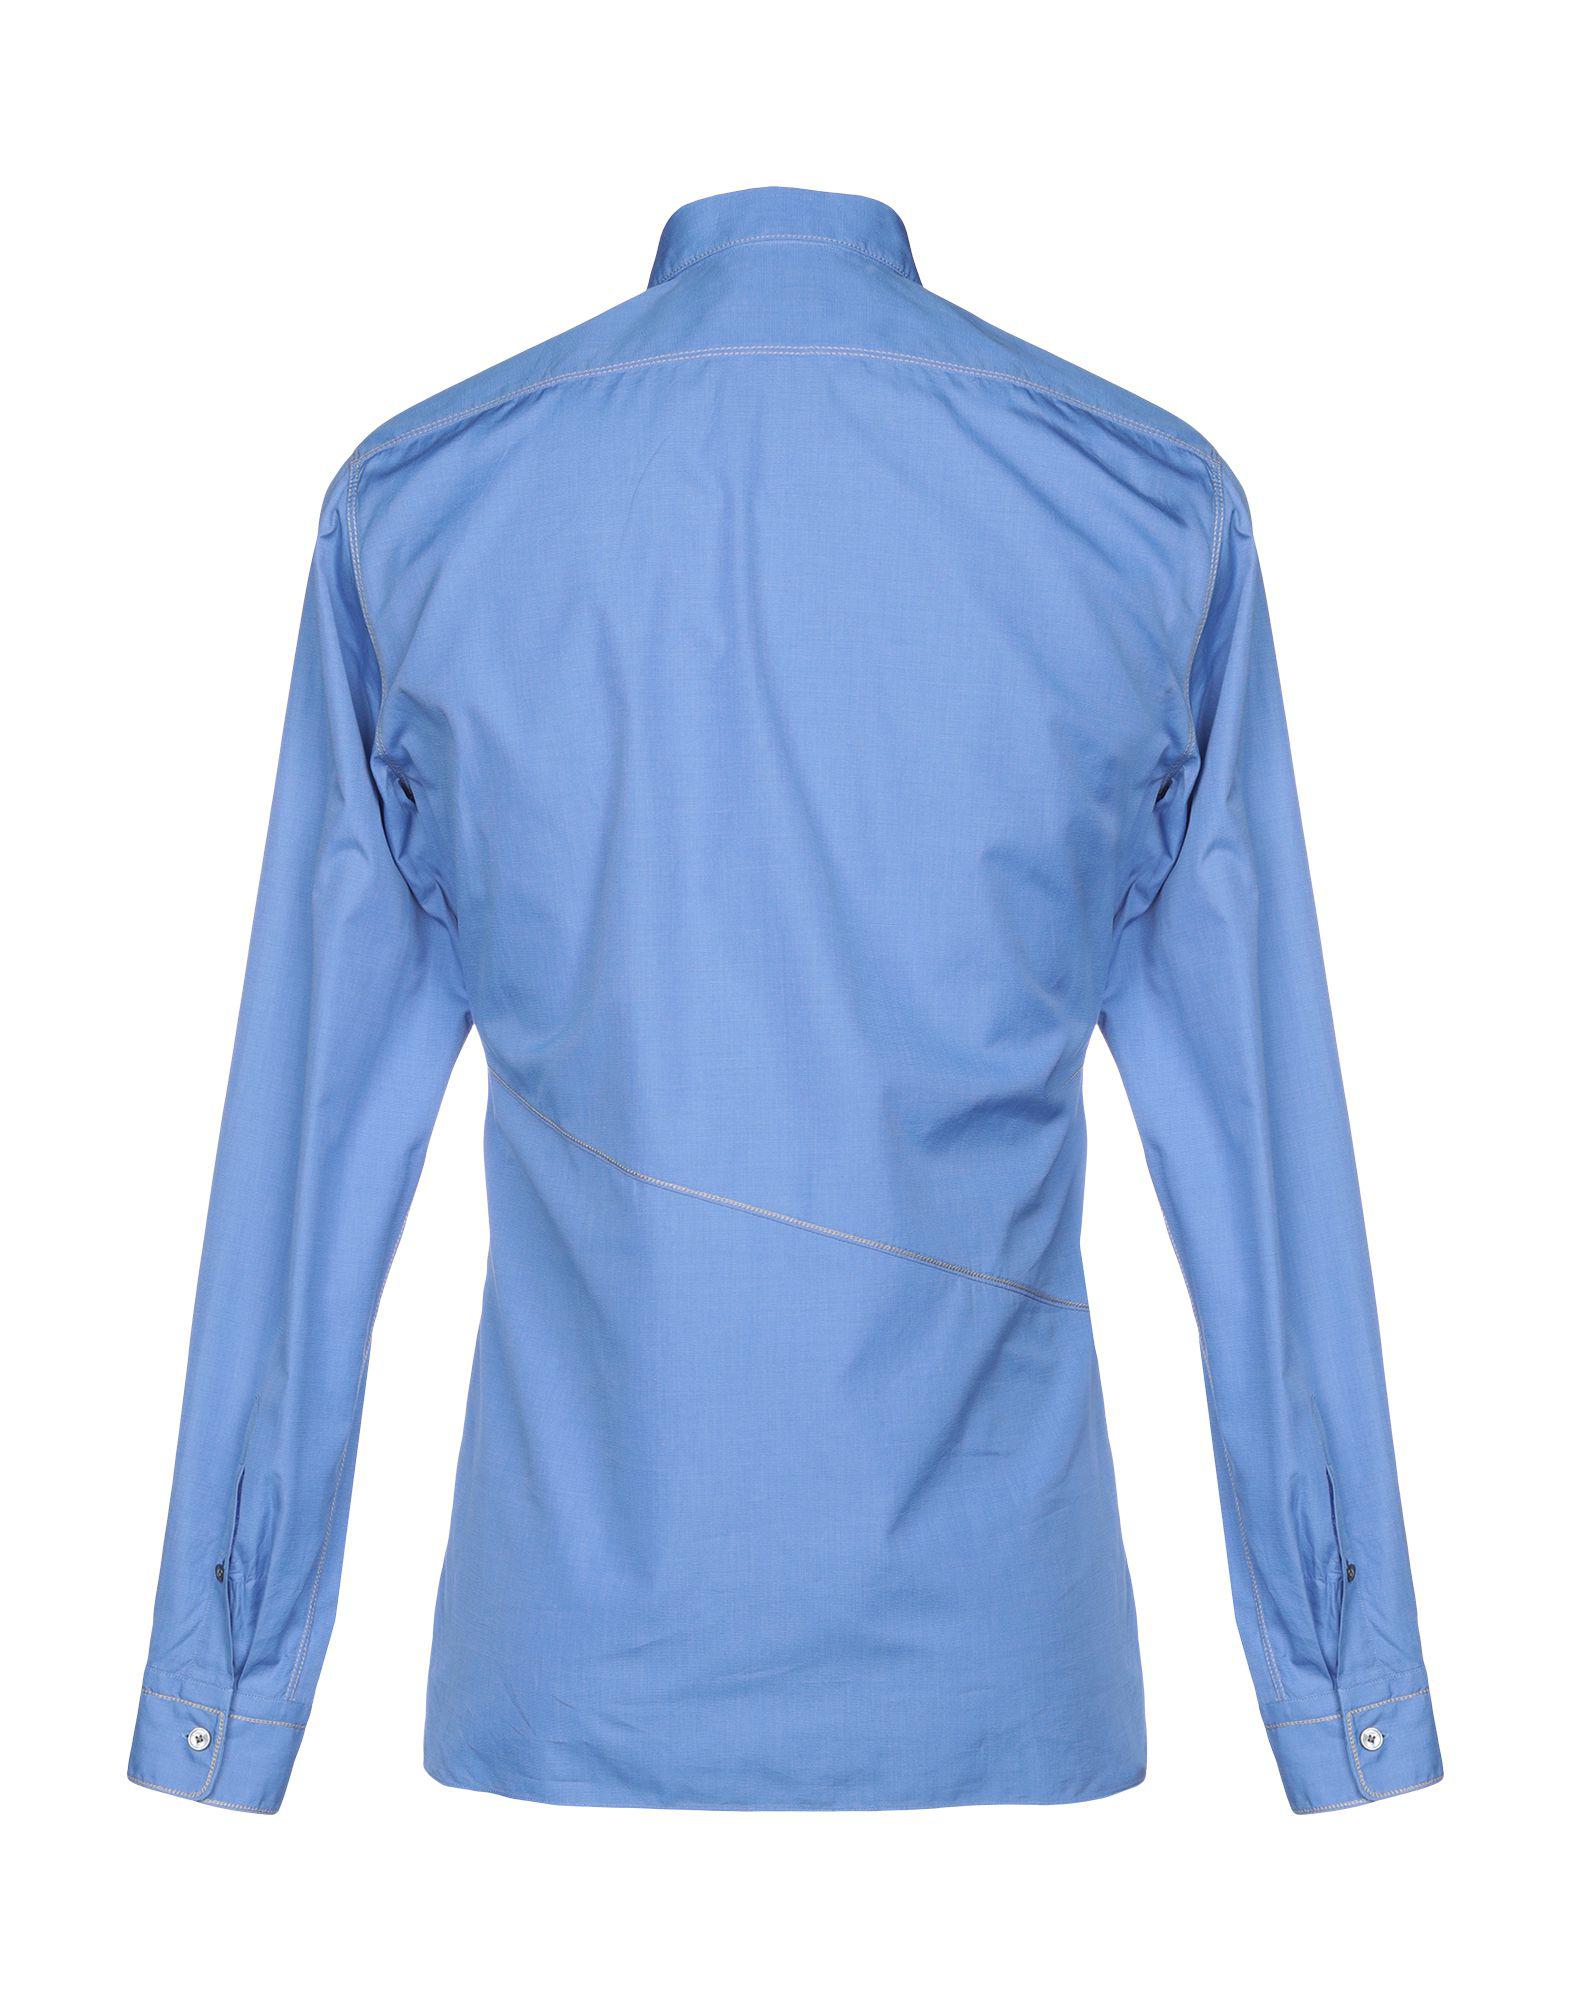 Lanvin Shirt in Blue for Men - Lyst